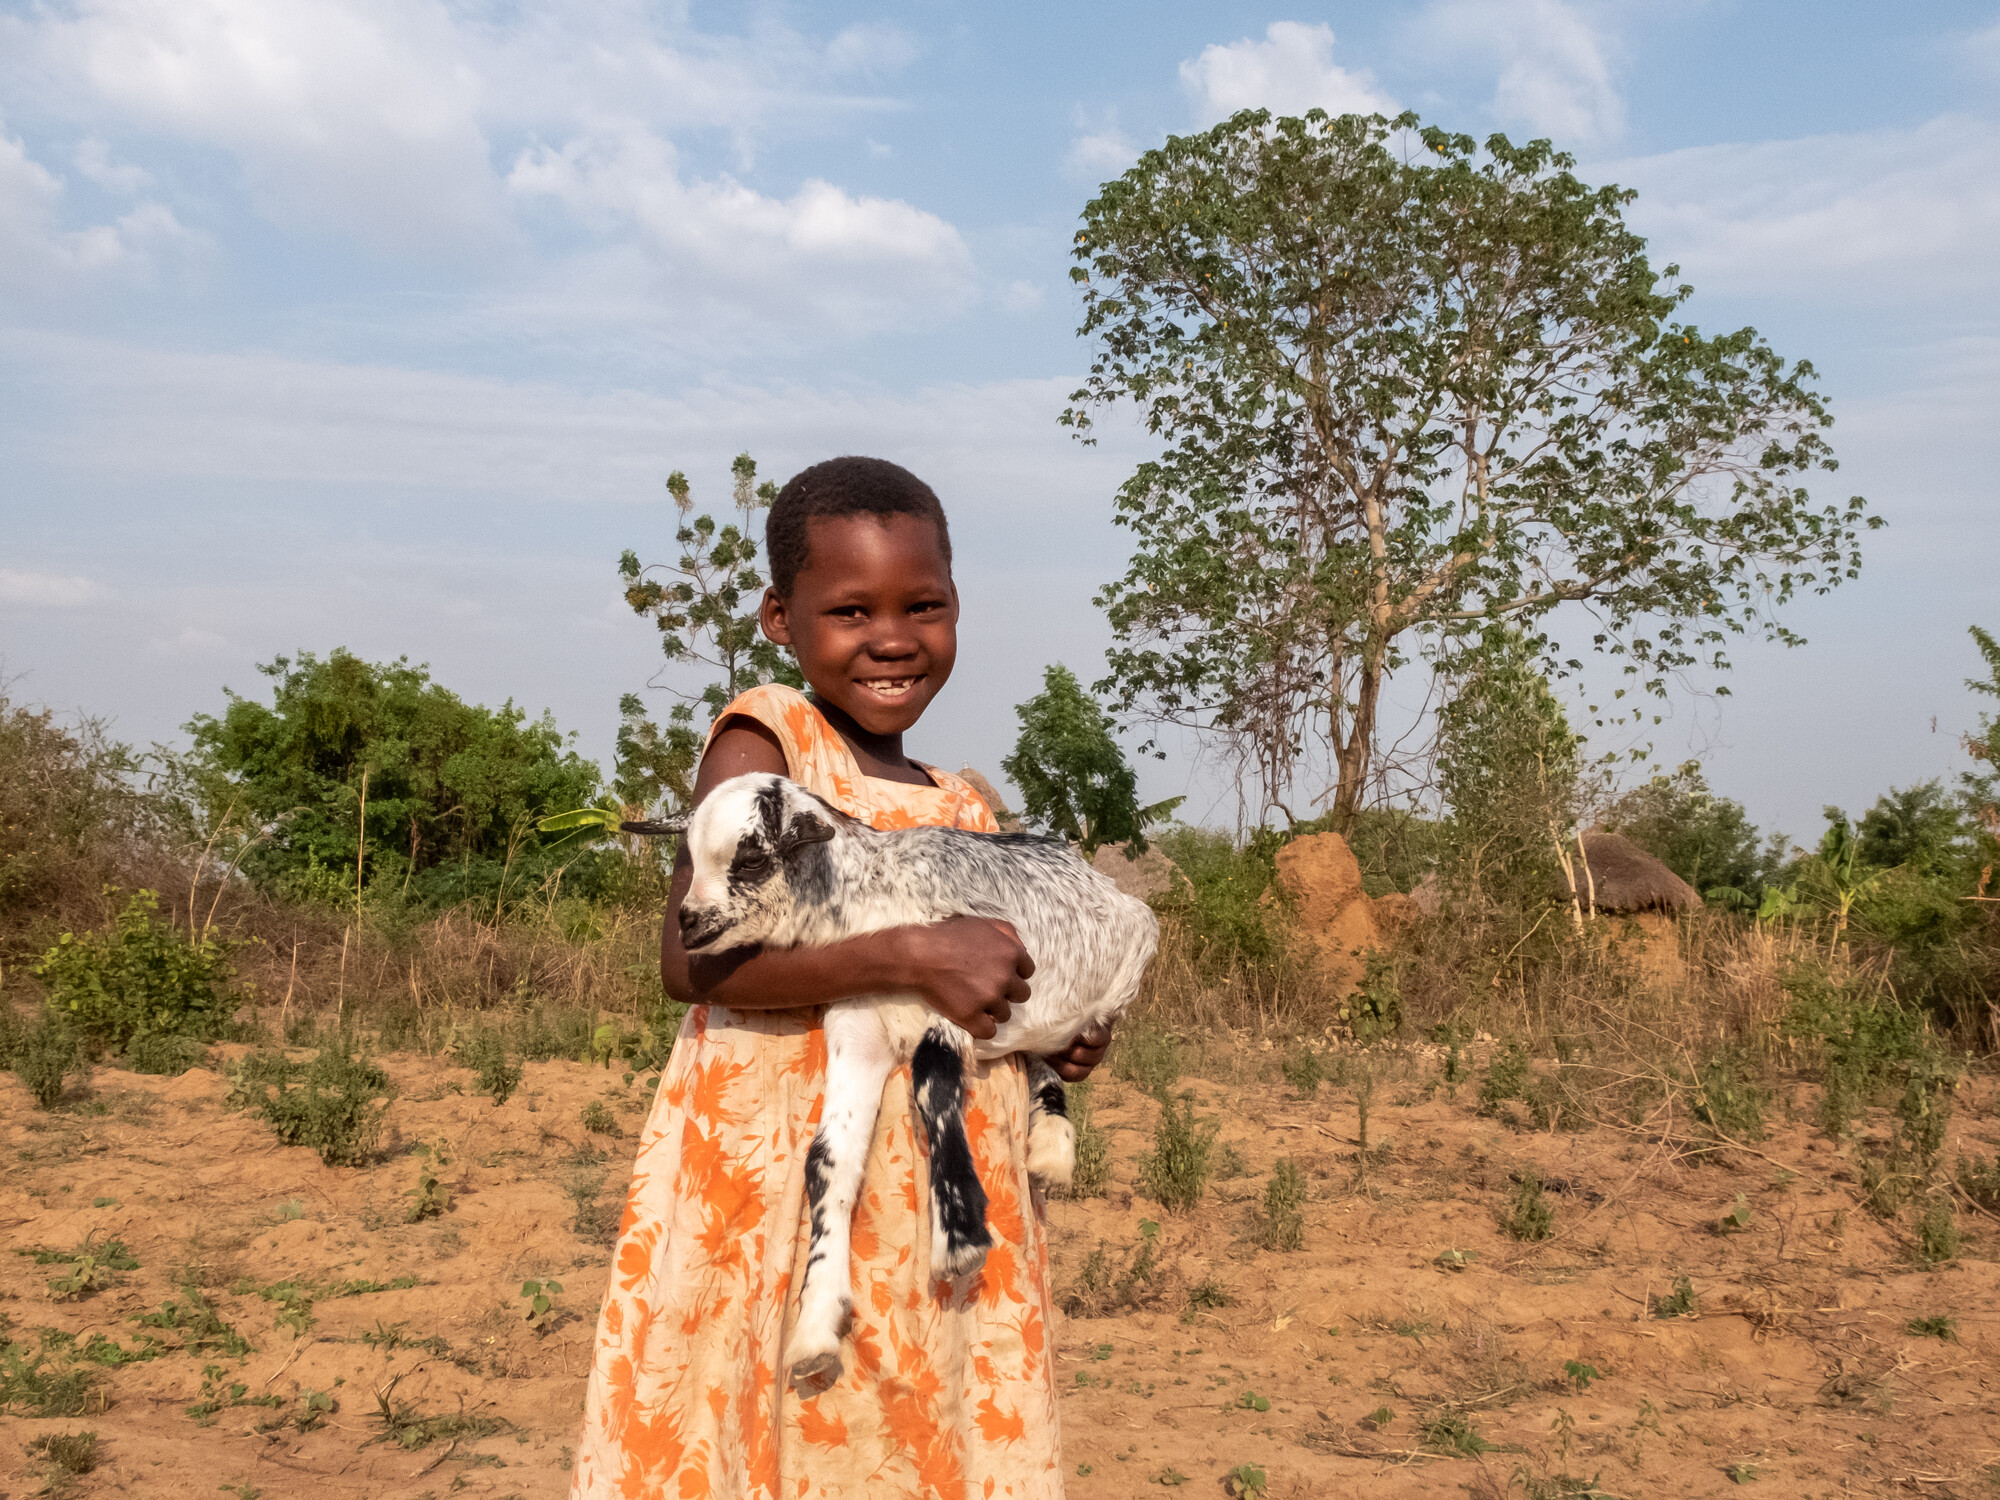 Jerrn Ipene holds a baby goat at a farm in Uganda.